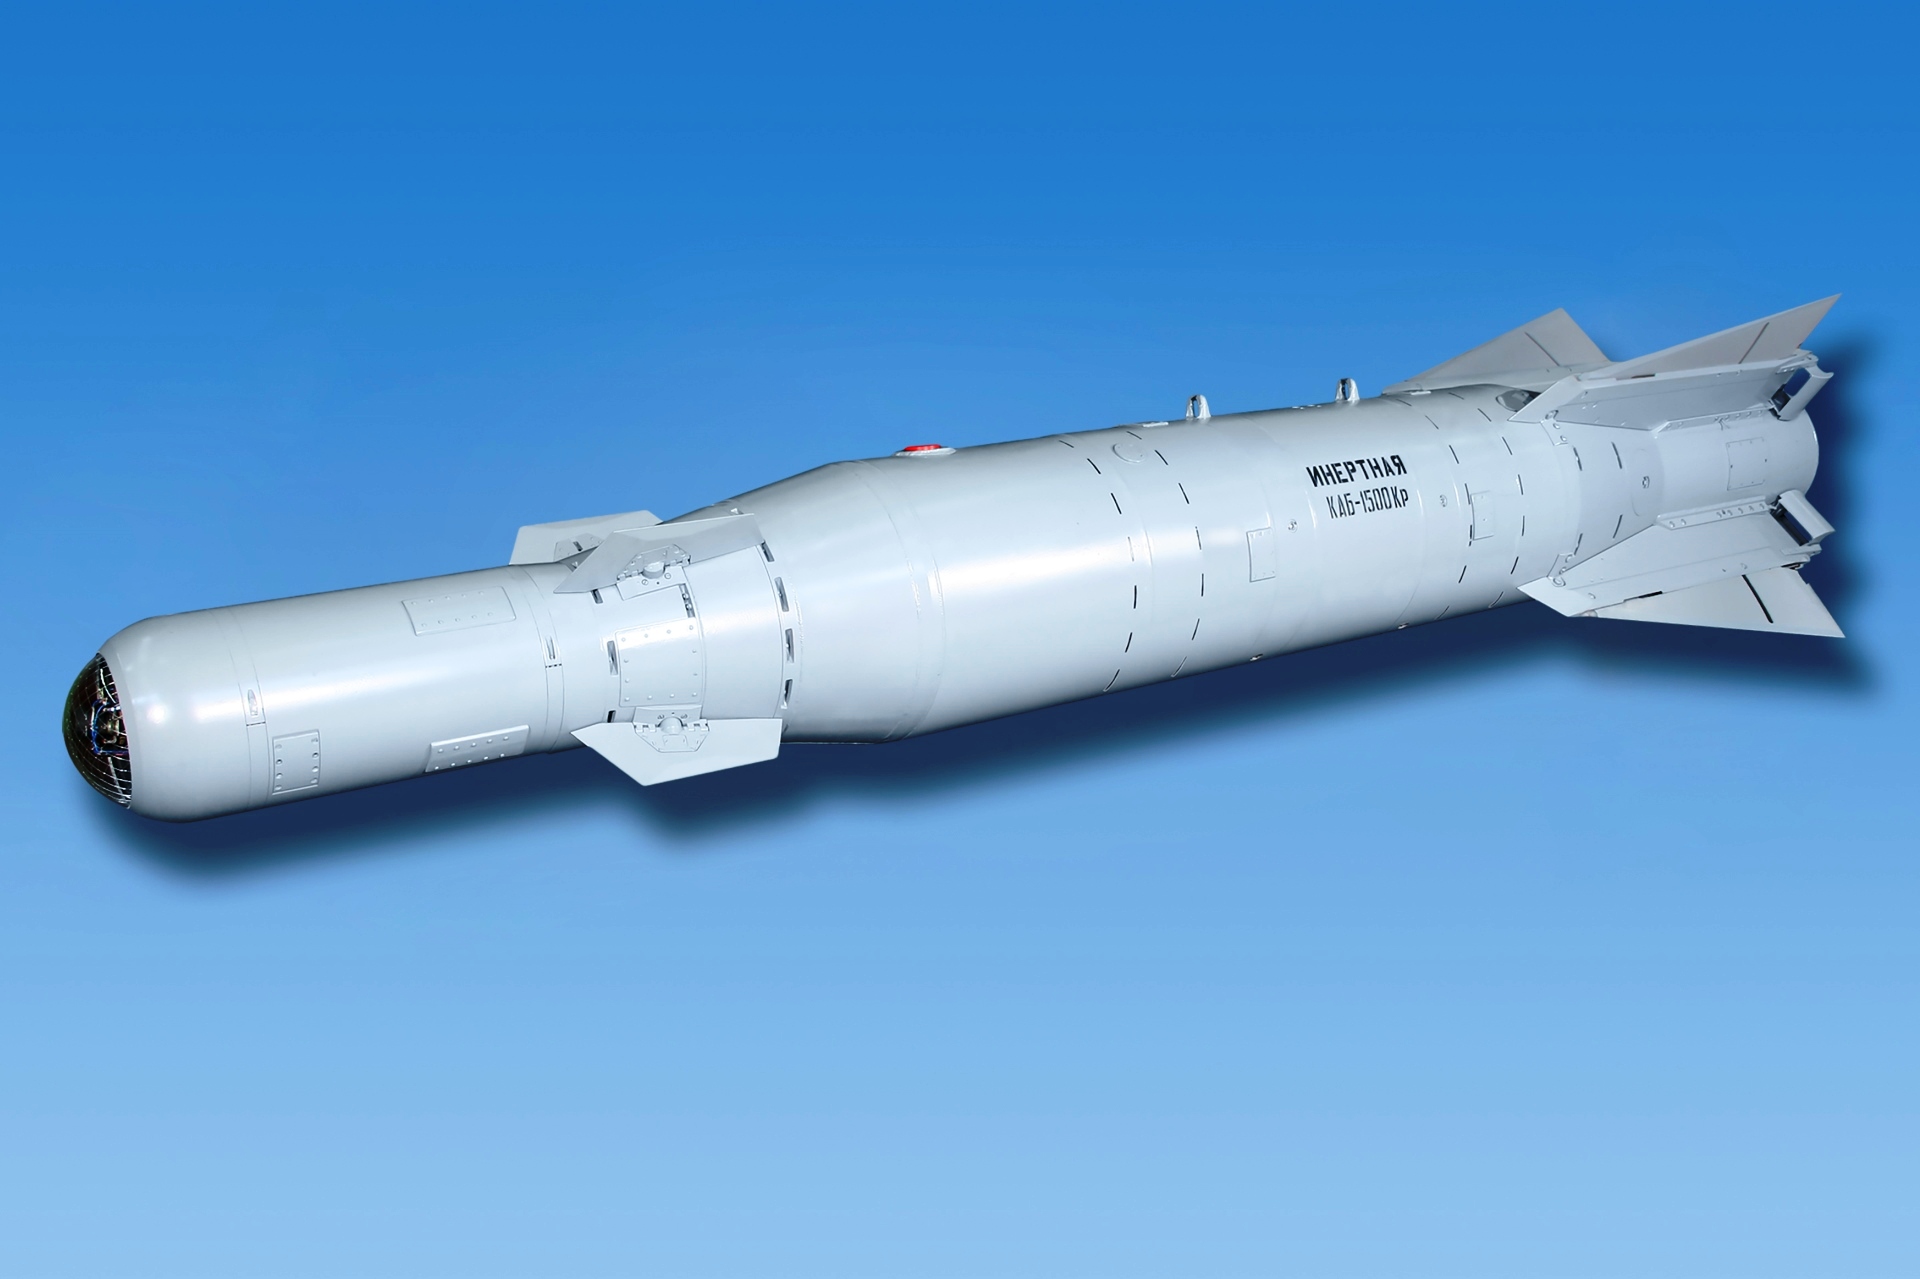 Каб 500 од. Корректируемая Авиационная бомба каб-1500лг. Управляемая Авиационная бомба каб-1500. Каб-1500кр(ЛГ);. УПАБ-1500б.